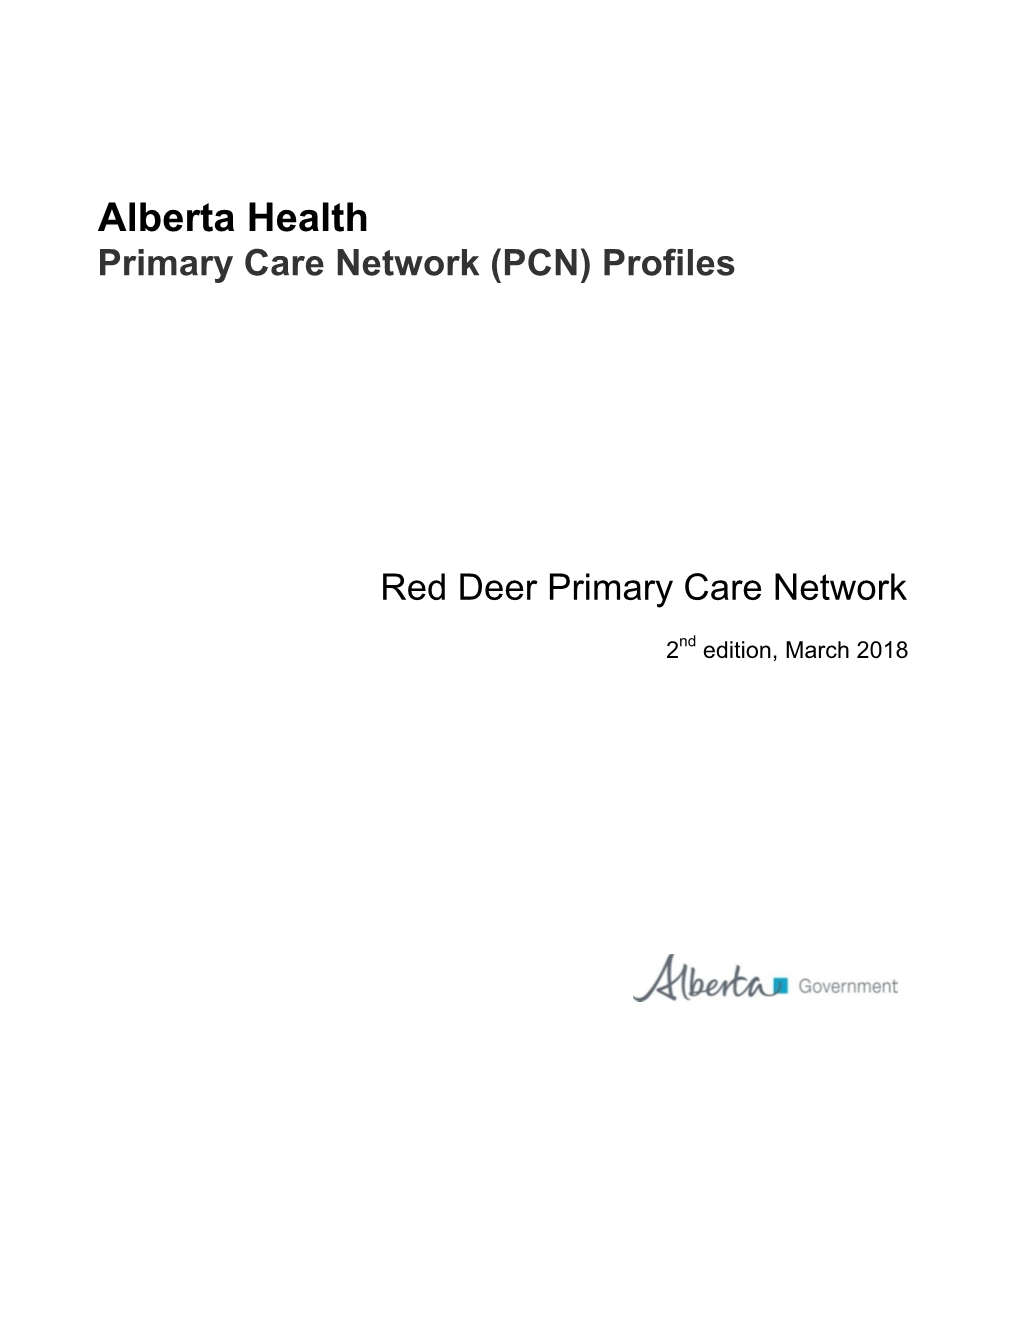 Primary Health Care Delivery in Alberta